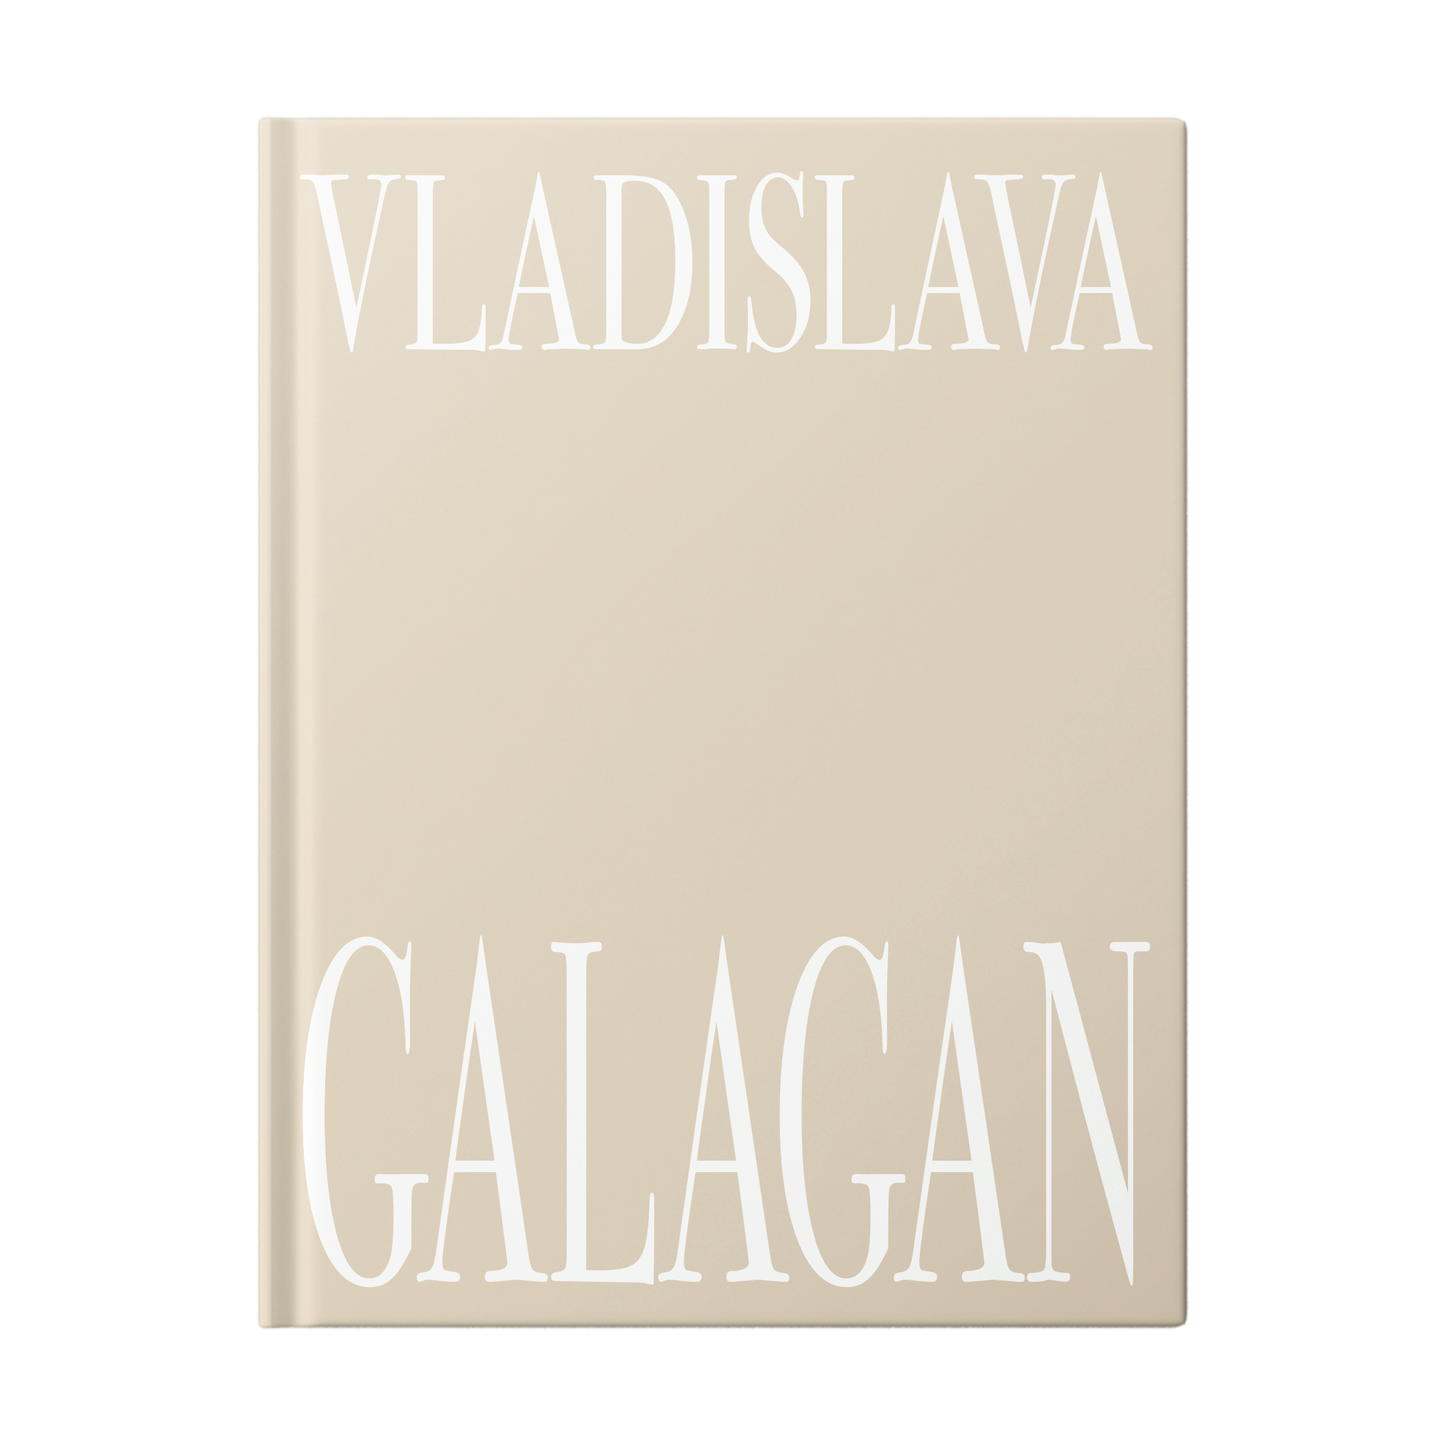 Vladislava Galagan